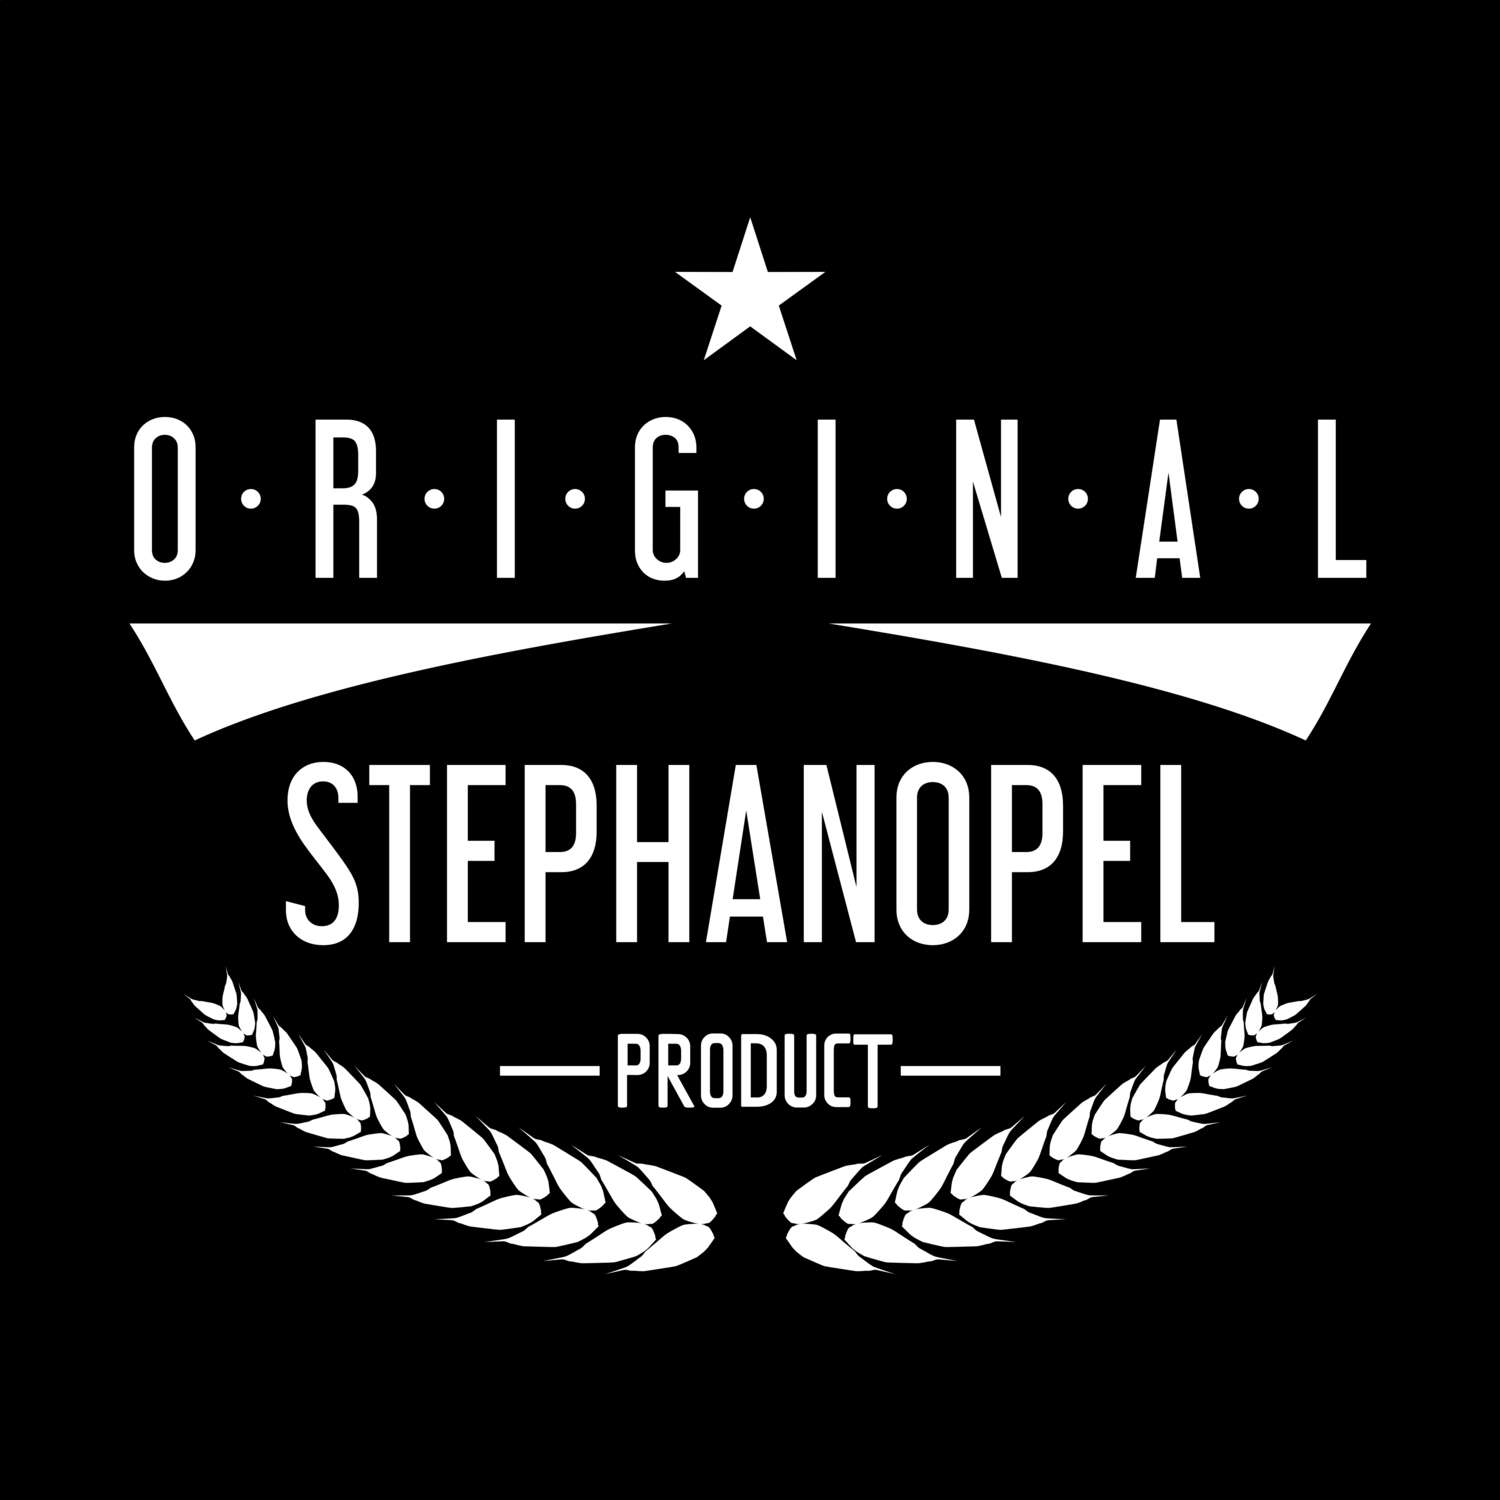 Stephanopel T-Shirt »Original Product«